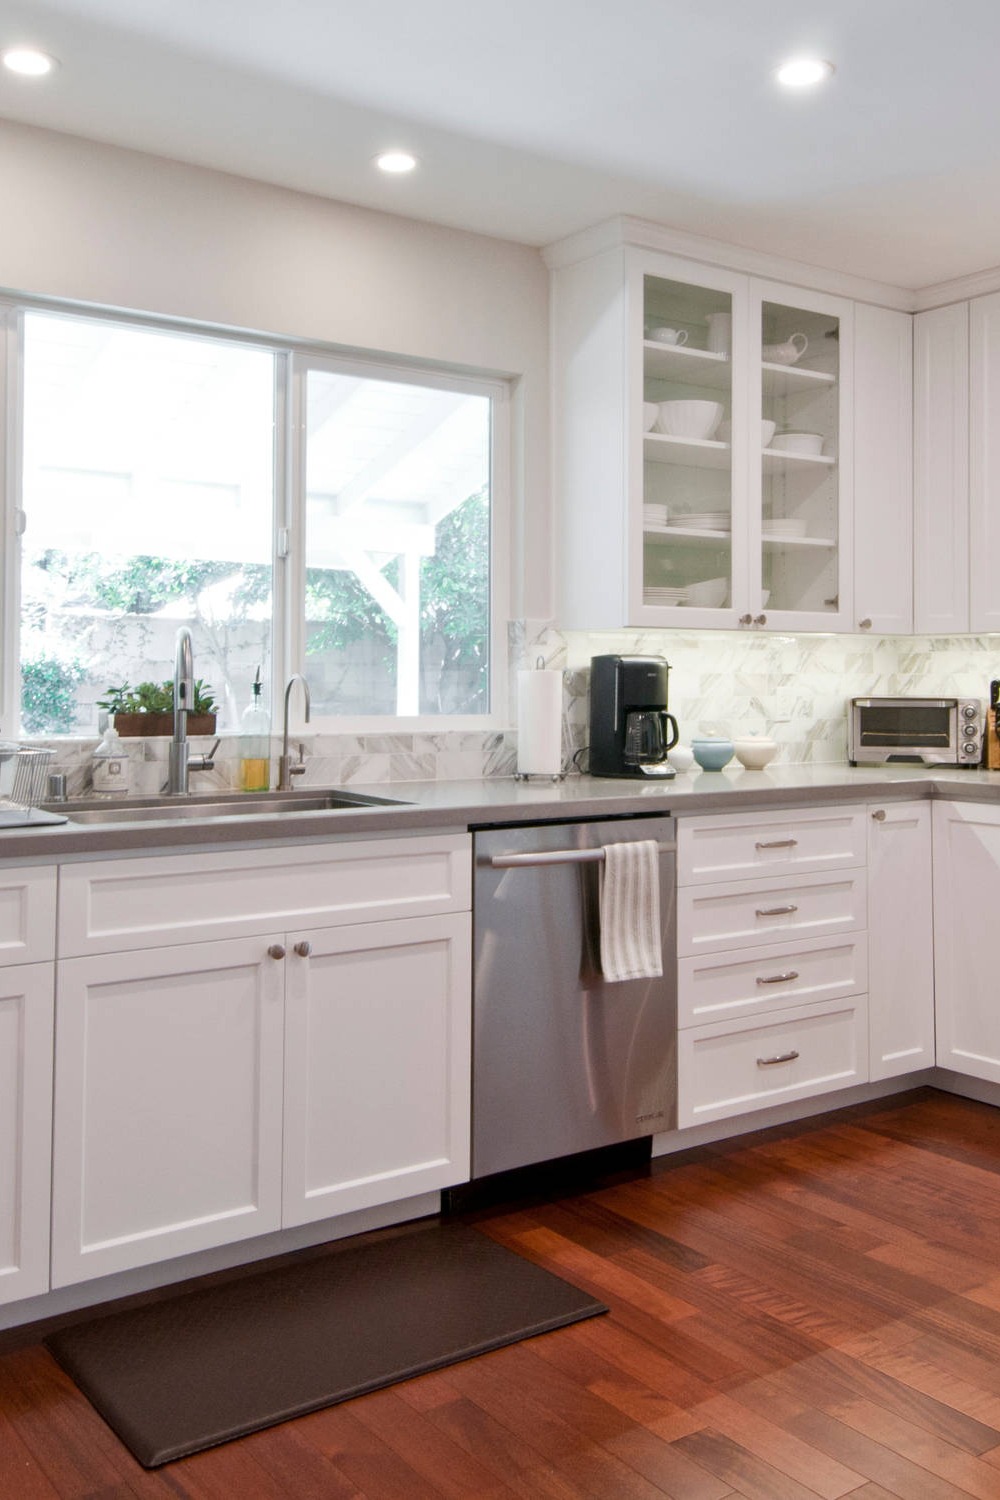 Wood Cabinets Kitchen Backsplashes Chevron Pattern Brass Accents Backsplash Design Gray Quartz Countertop